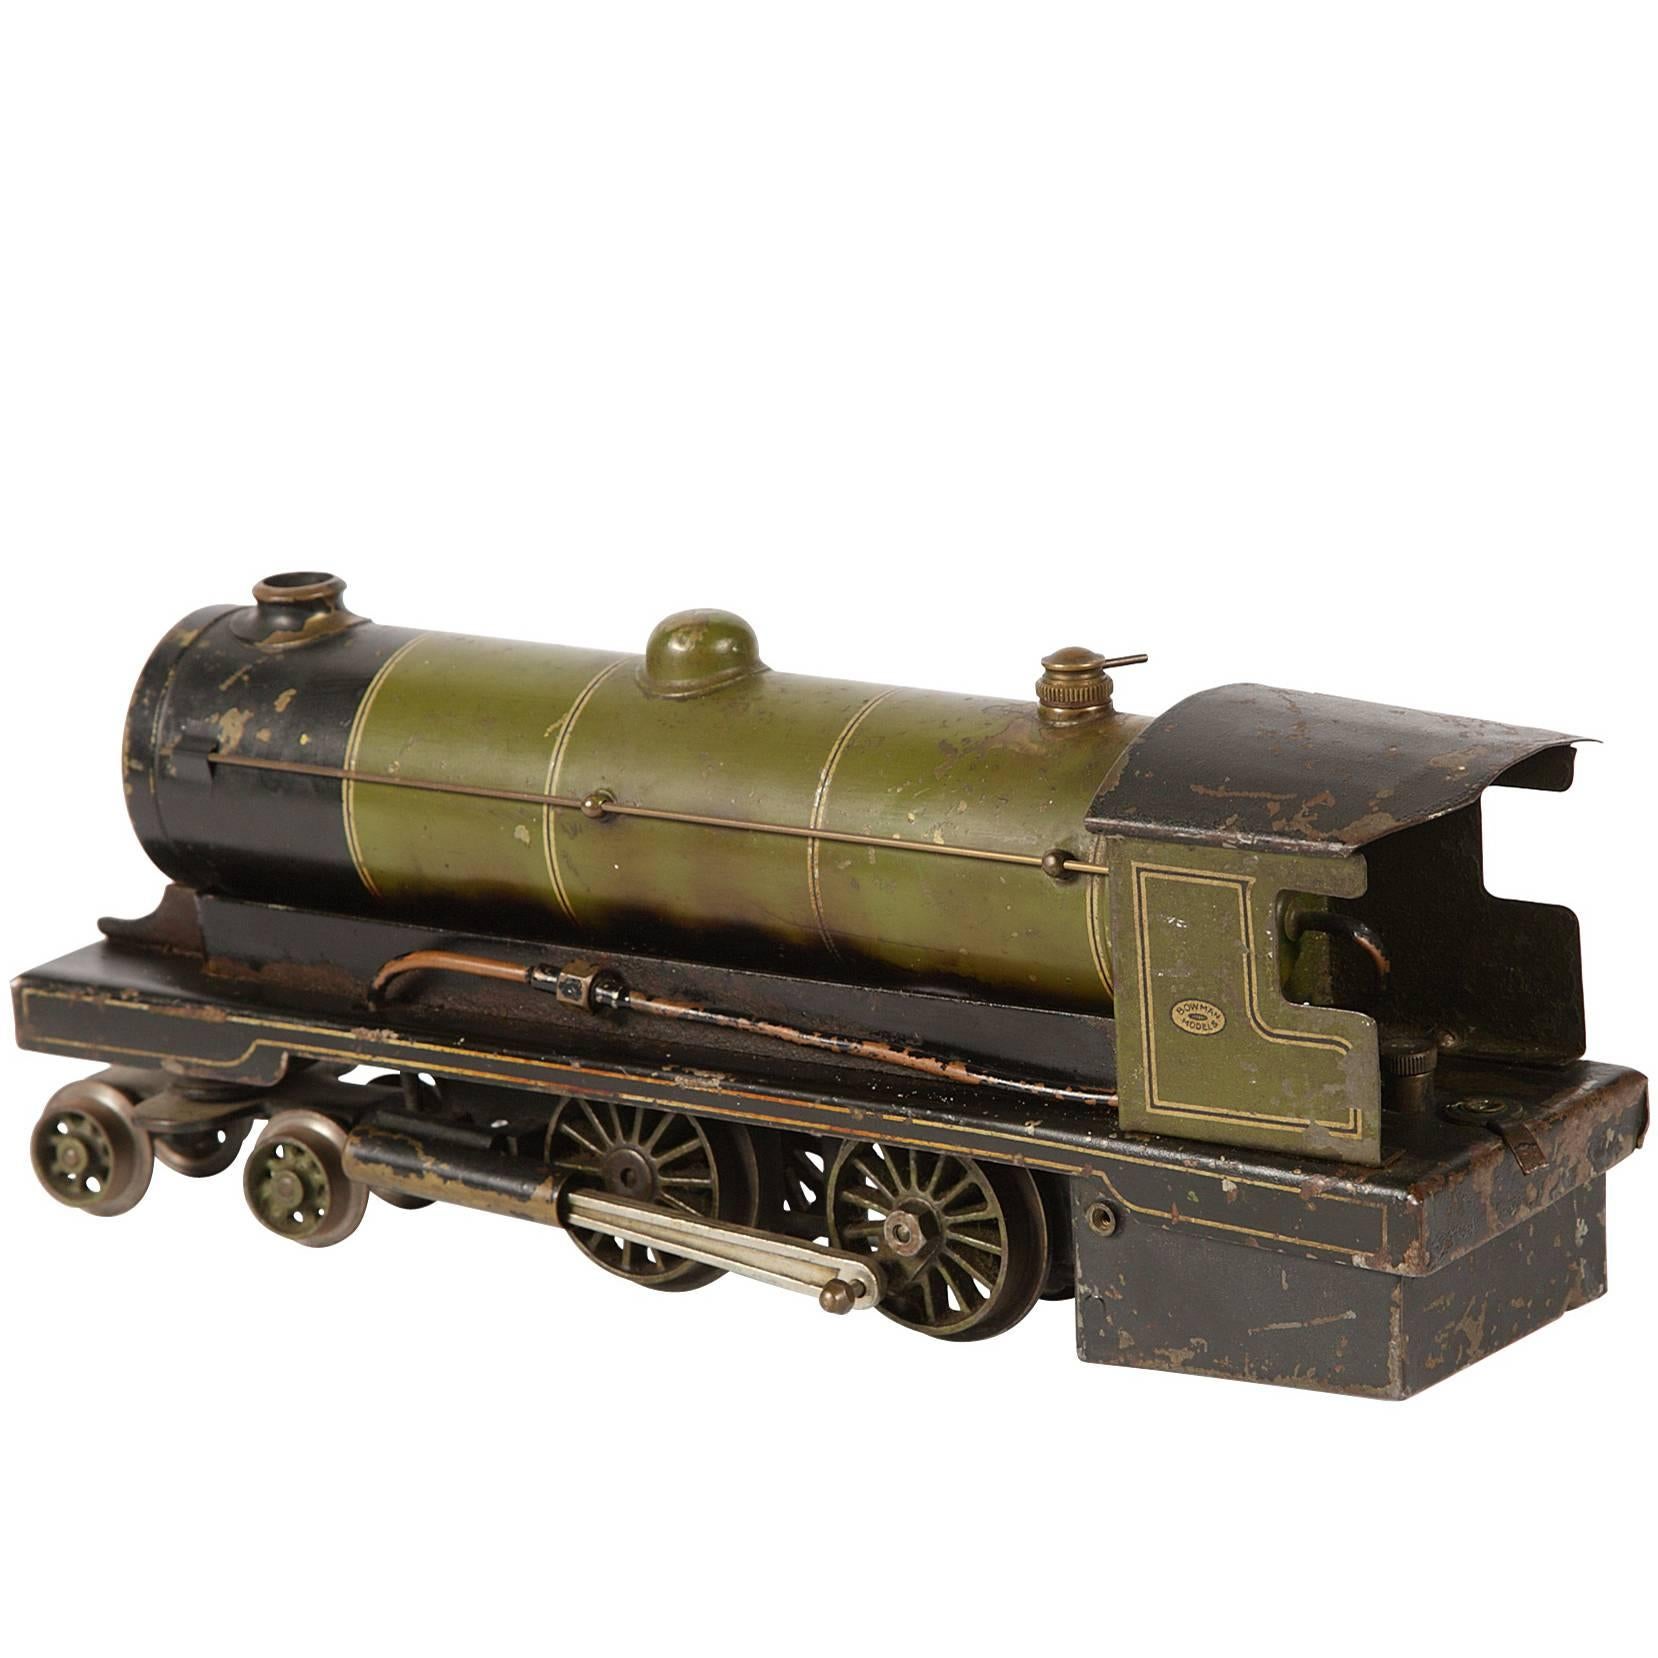 Nice Vintage Steam Model Locomotive by Bowman For Sale